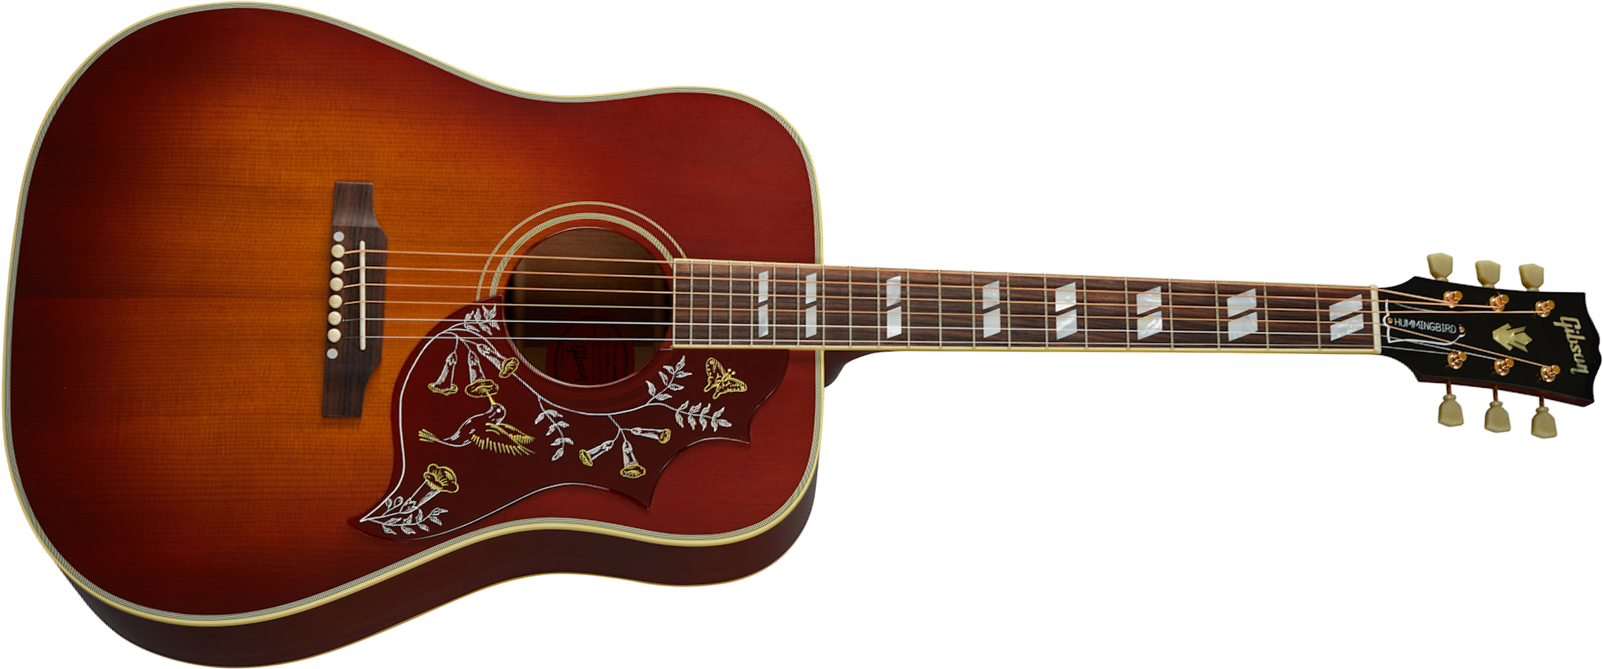 Gibson Custom Shop Hummingbird 1960 Fixed Bridge Dreadnought Epicea Acajou Rw - Vos Heritage Cherry Sunburst - Acoustic guitar & electro - Main pictur